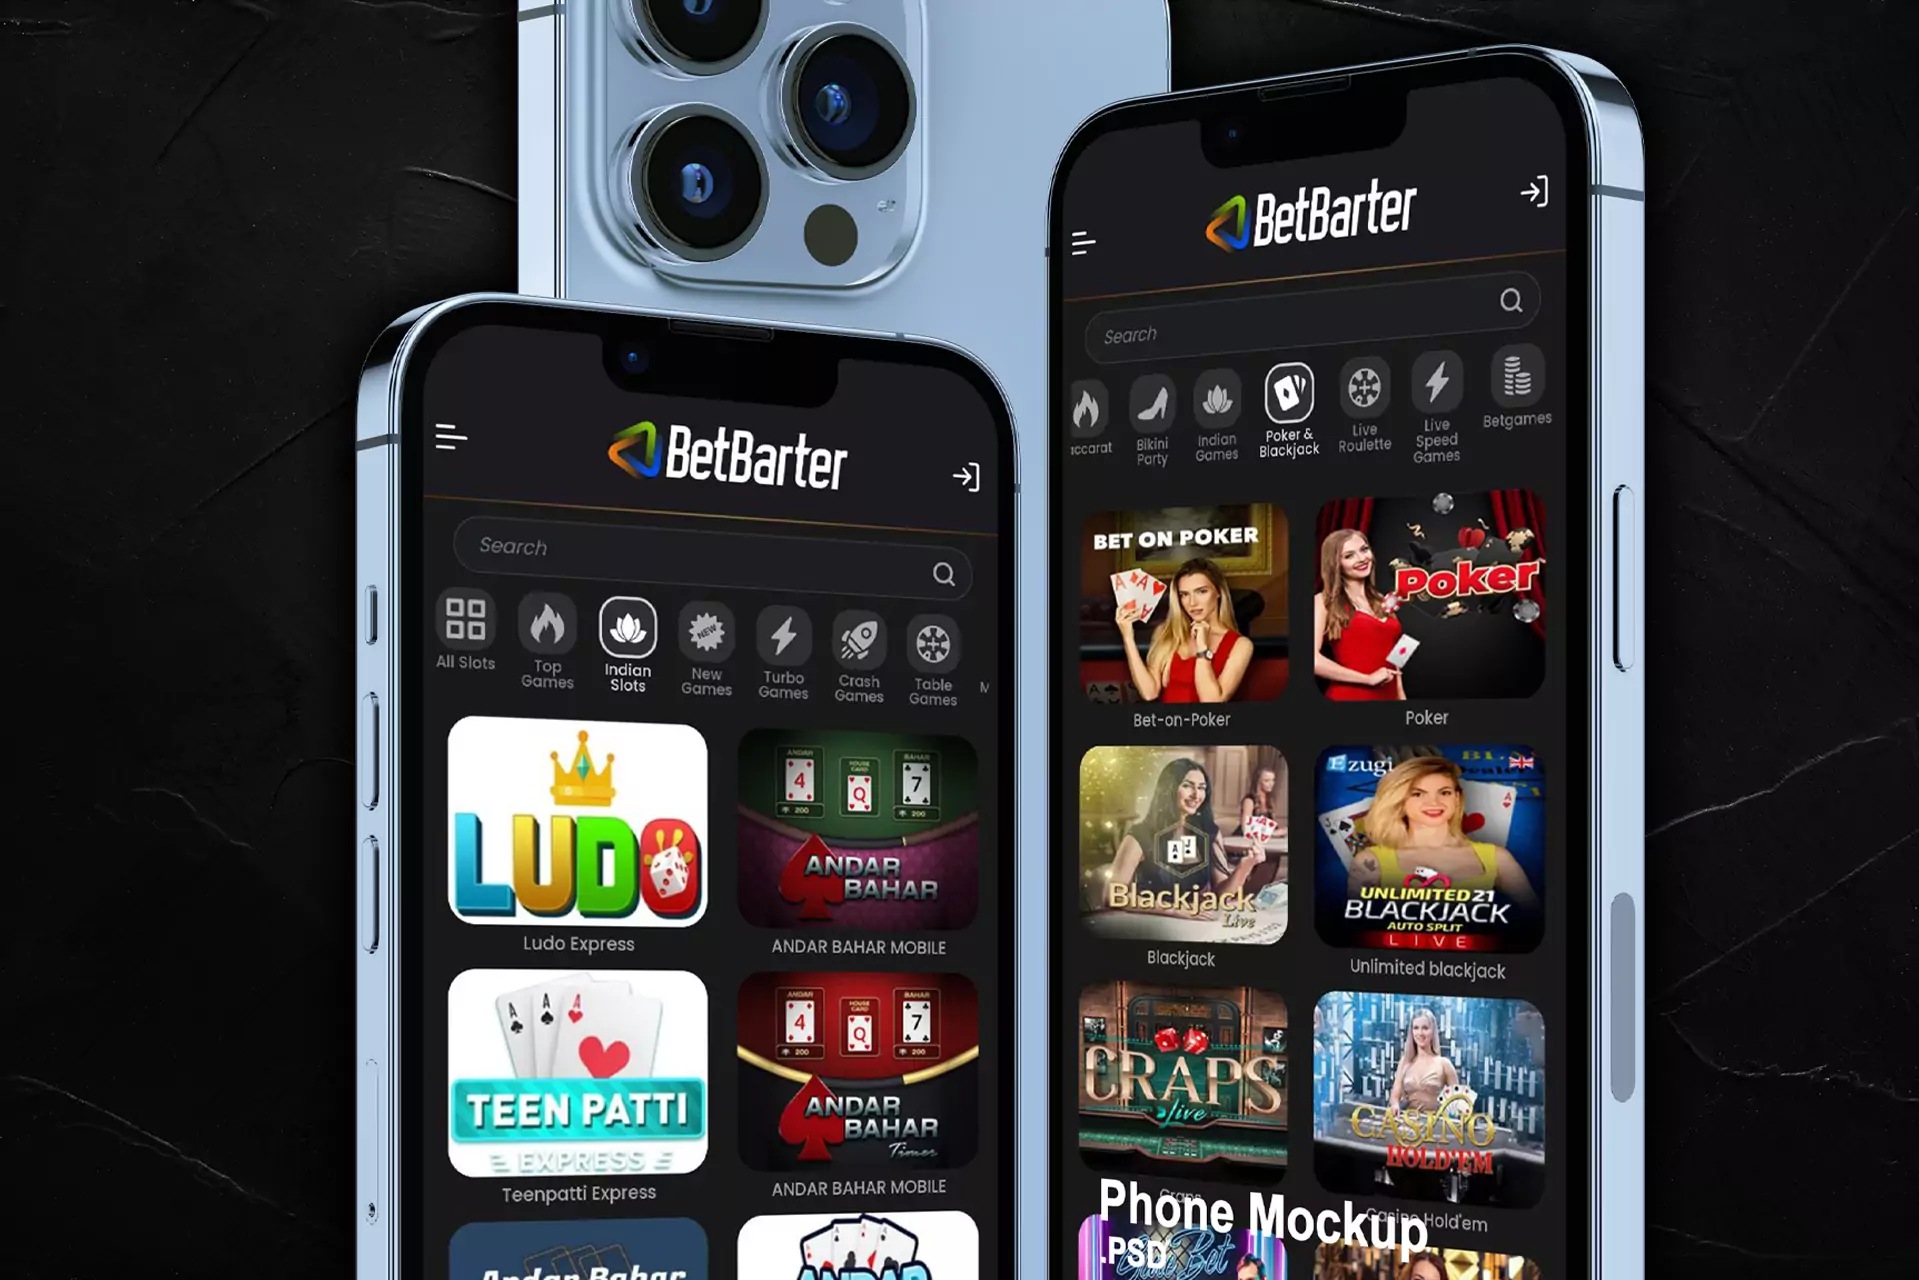 The Betbarter app features popular gambling games.